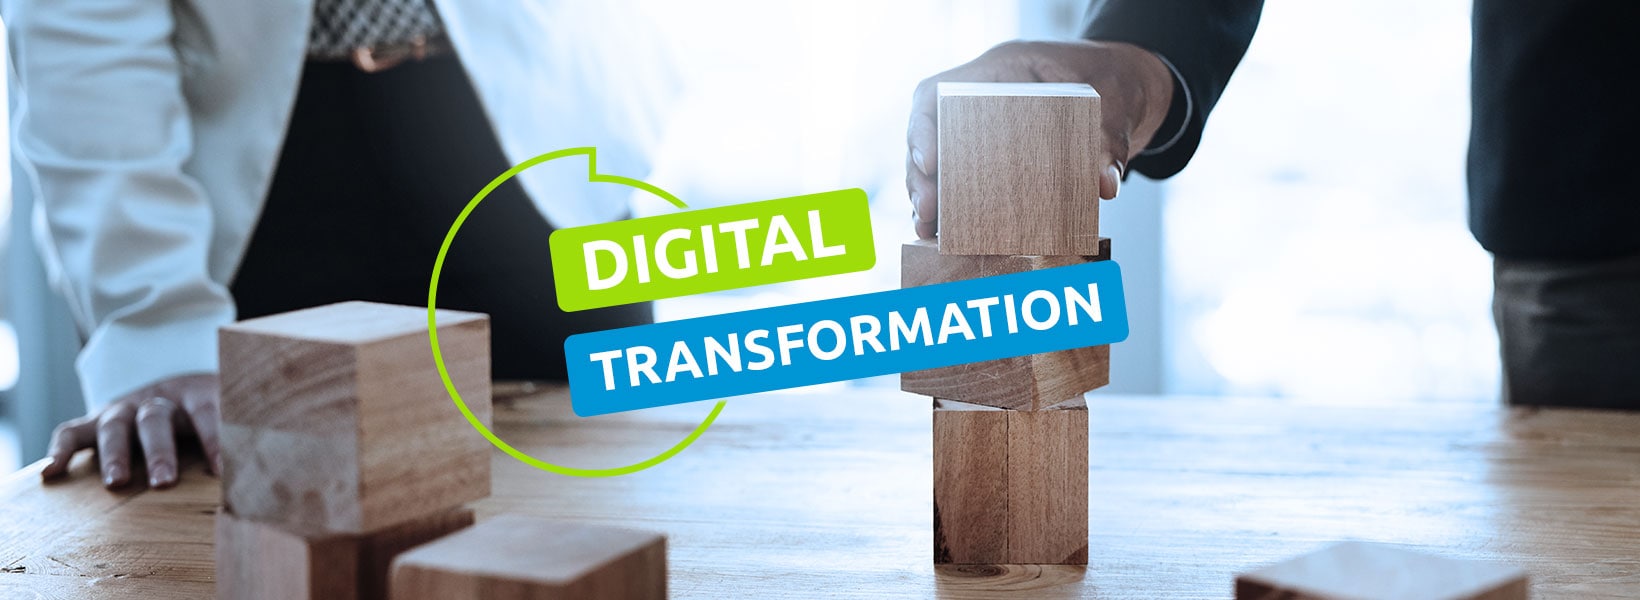 Digital Transformation in Customer Service – The Building Blocks for Successful Digital Transition (Part 2 of 4)